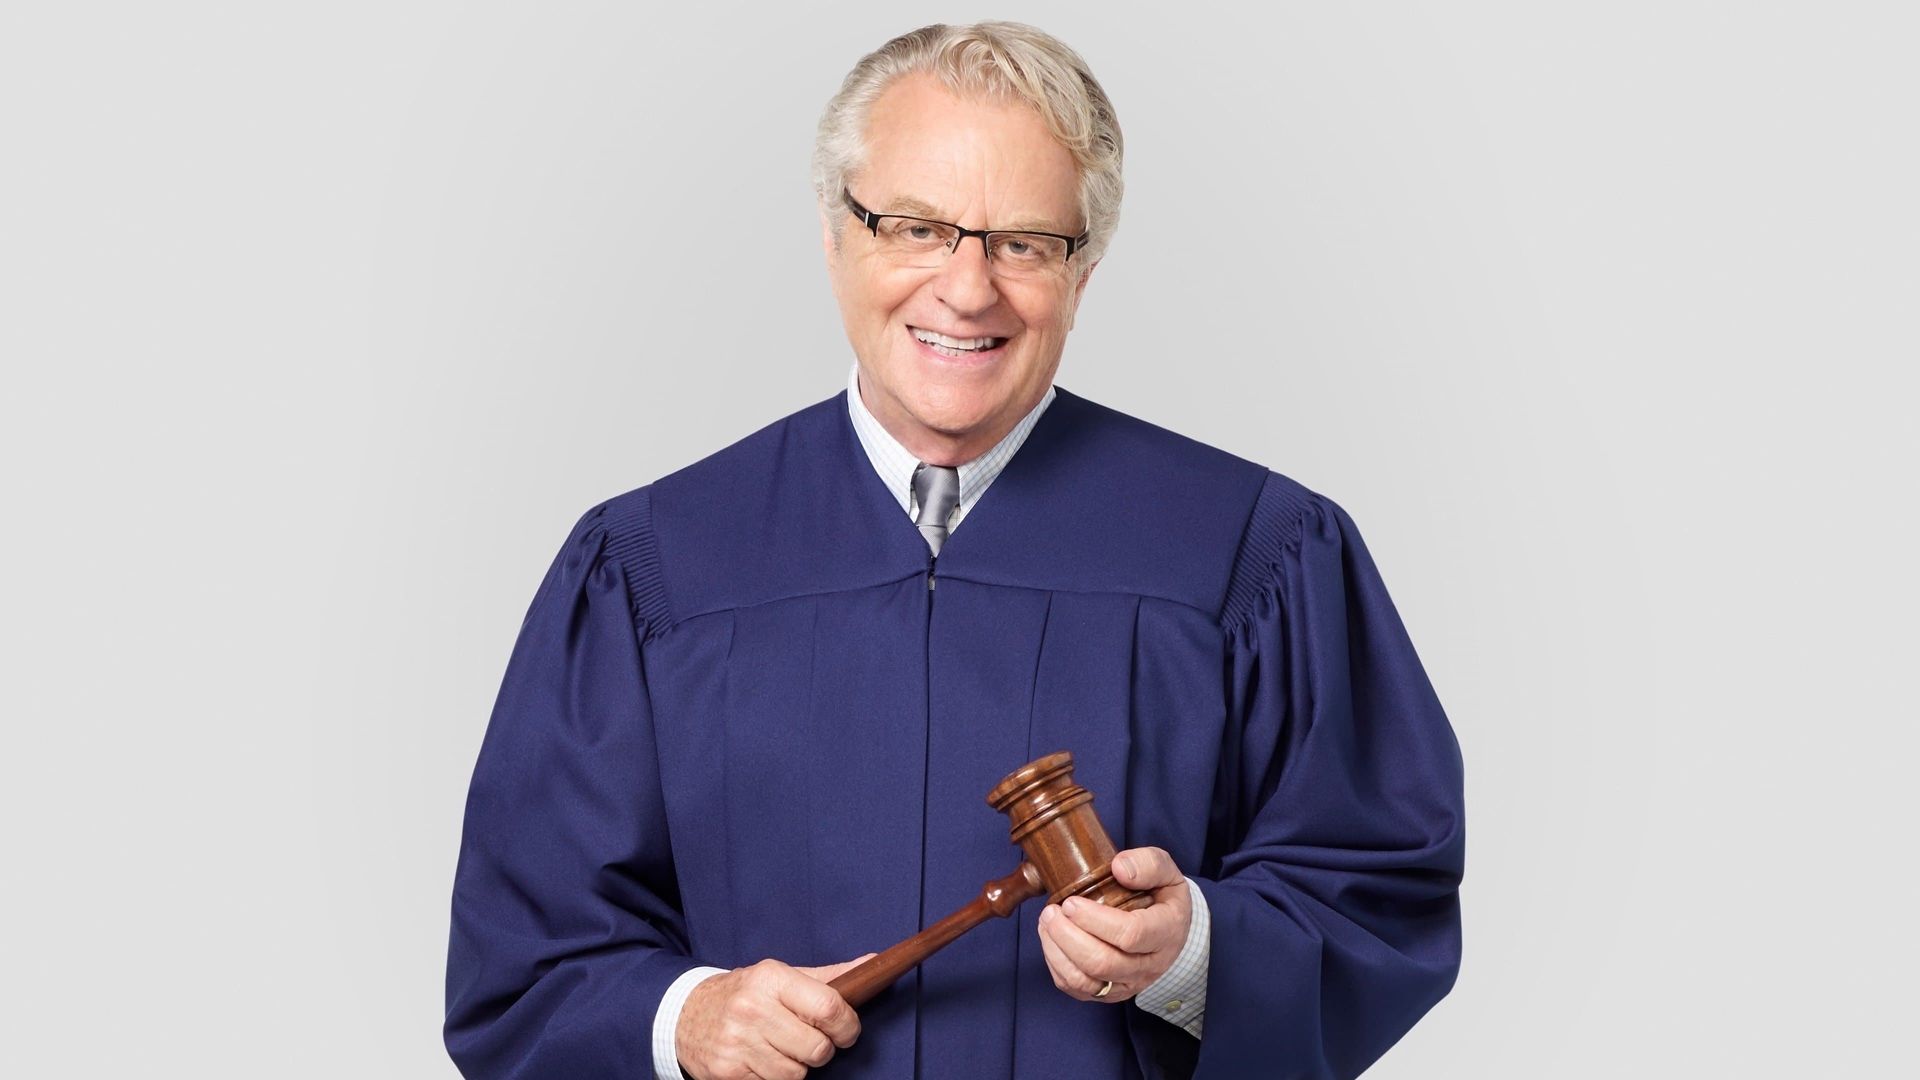 Judge Jerry background